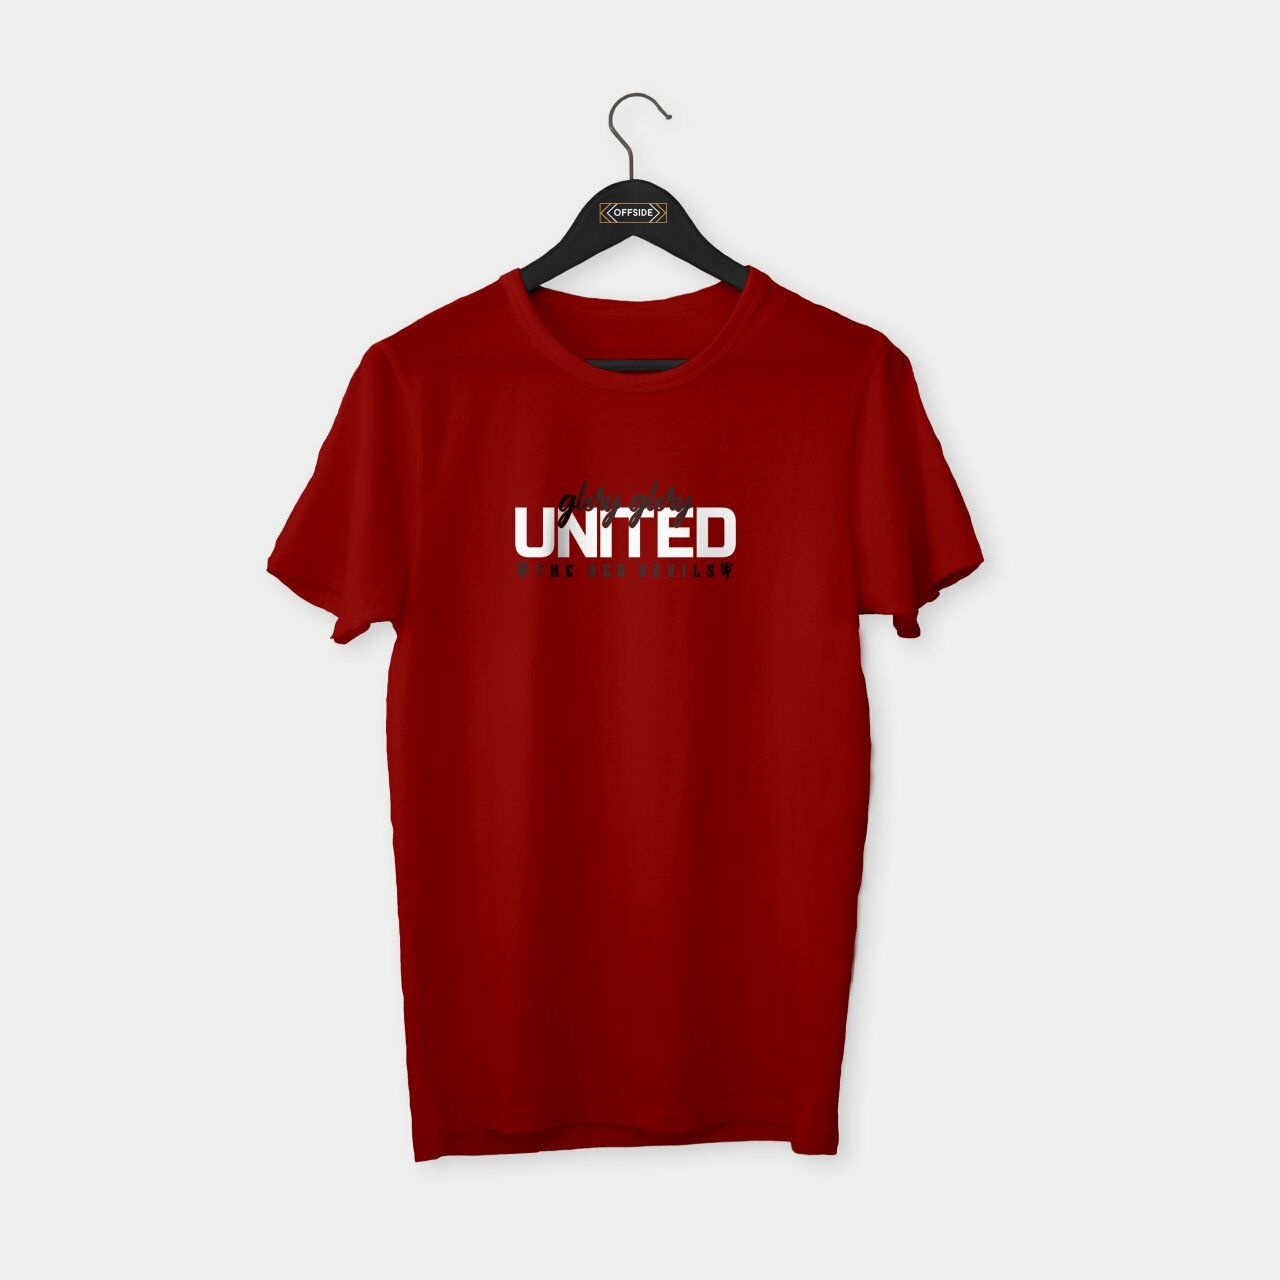 Manchester United - Glory United T-shirt